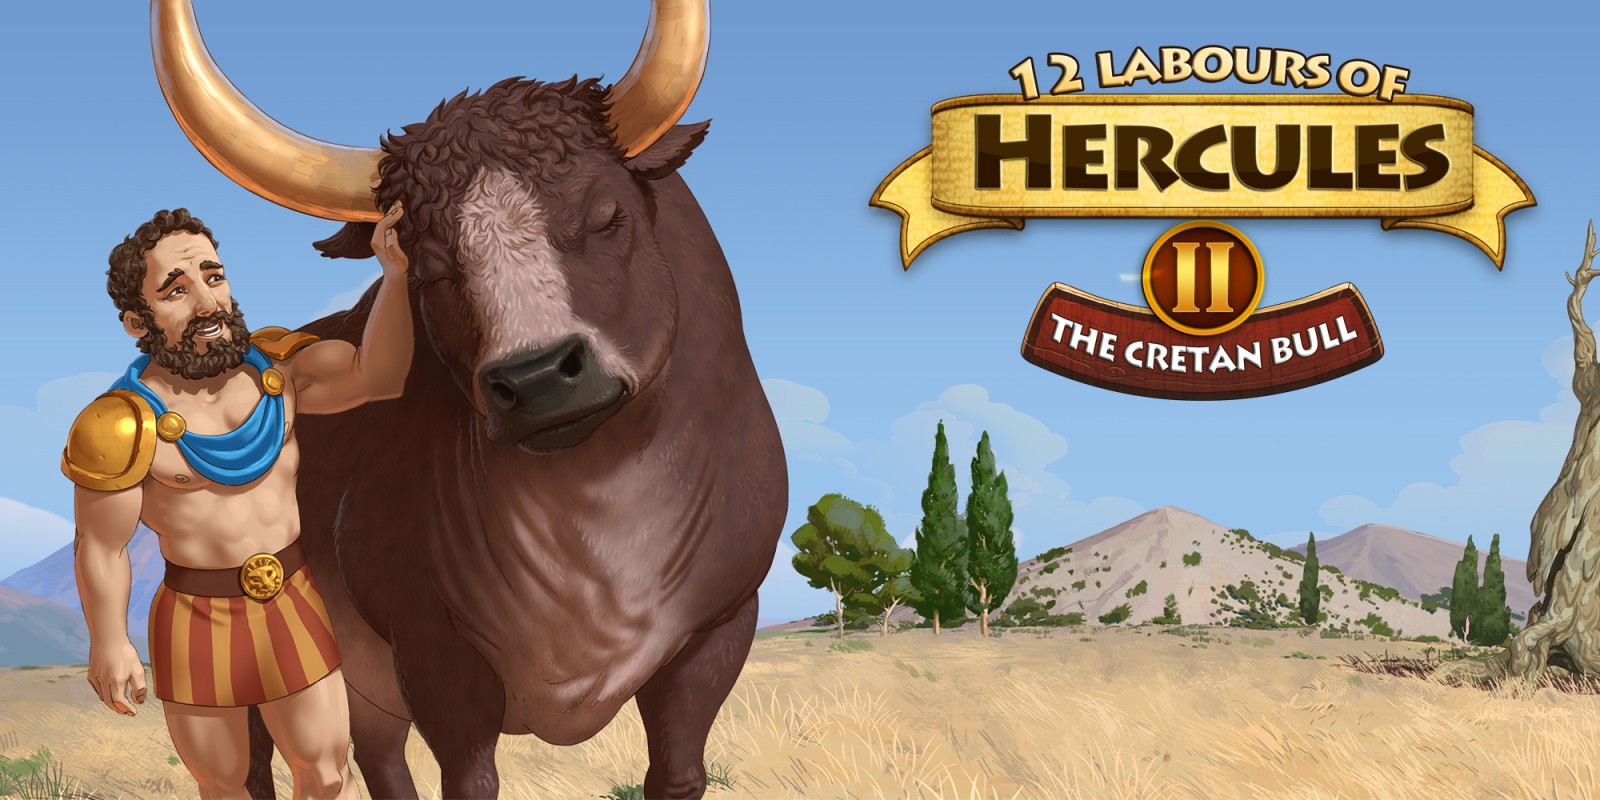 12 labours of hercules ii the cretan bull